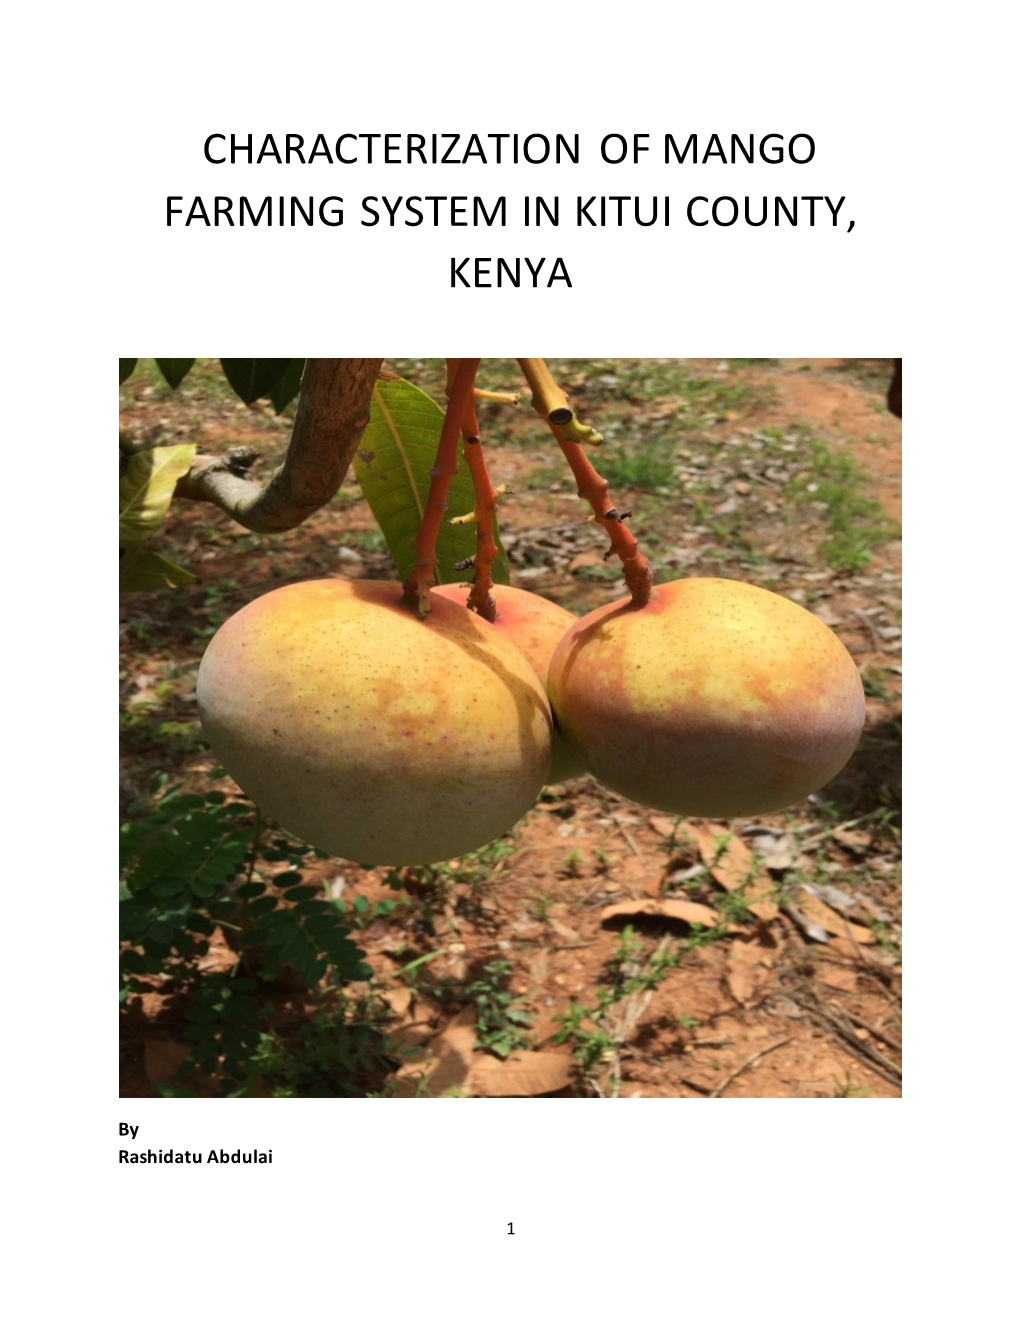 Characterization of Mango Farming System in Kitui County, Kenya